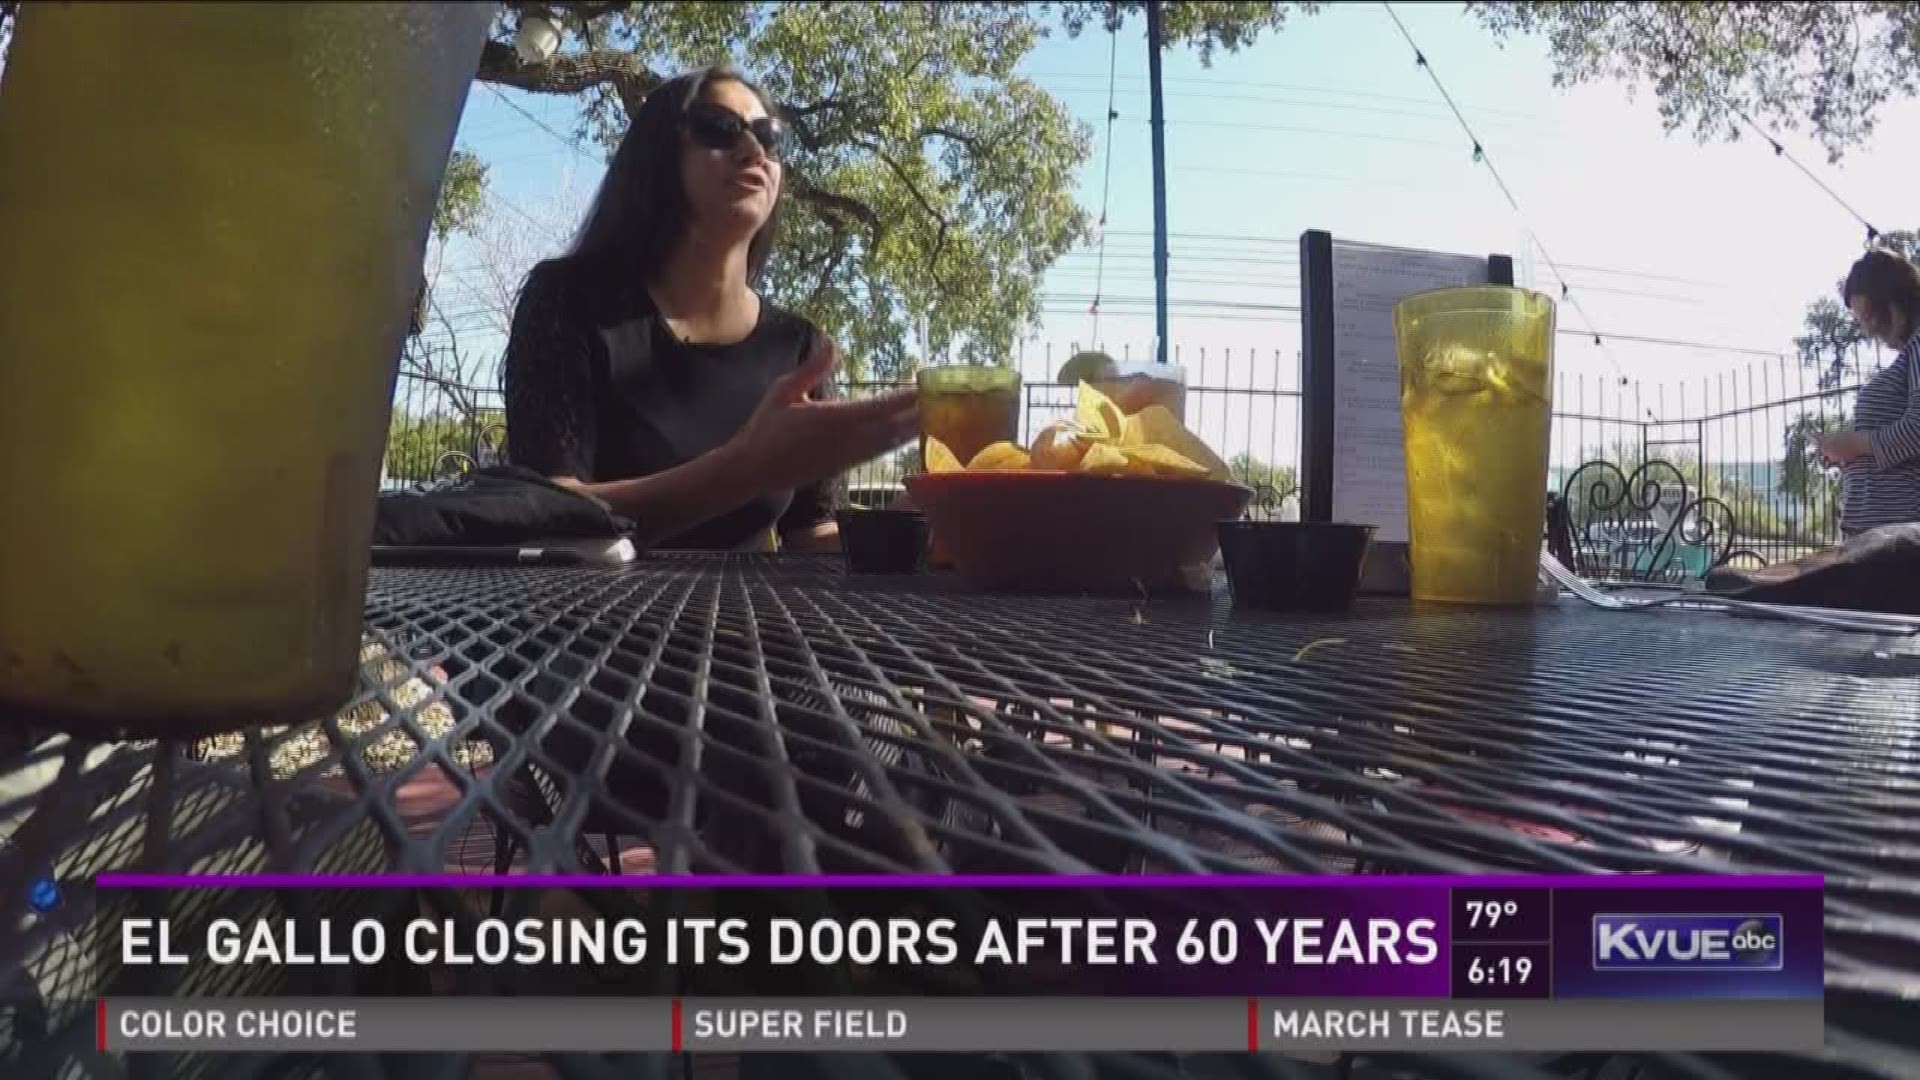 El Gallo closing its doors after 60 years